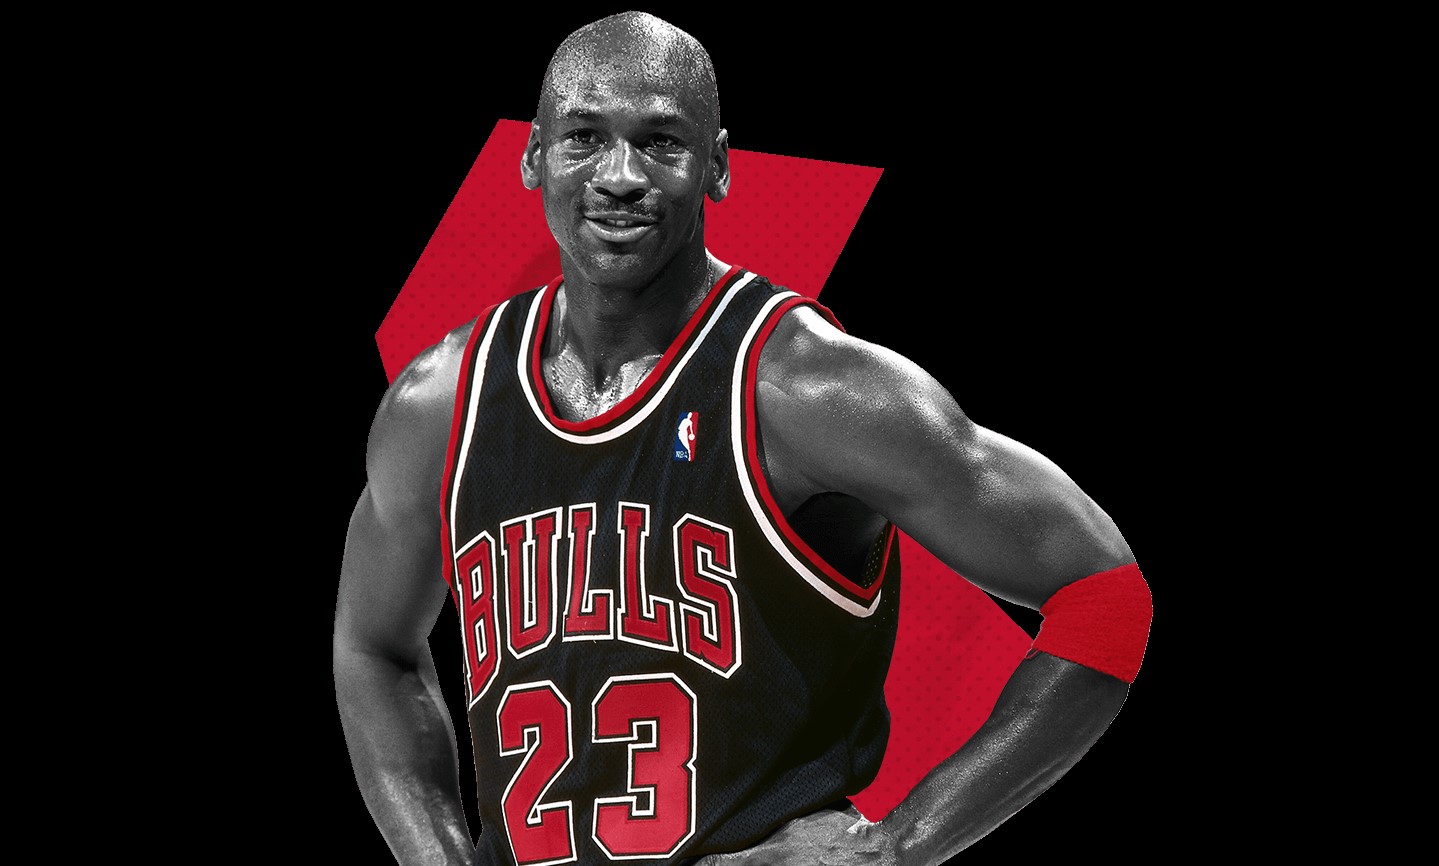 Unused Ticket to Michael Jordan's Bulls Debut Nets $468,000